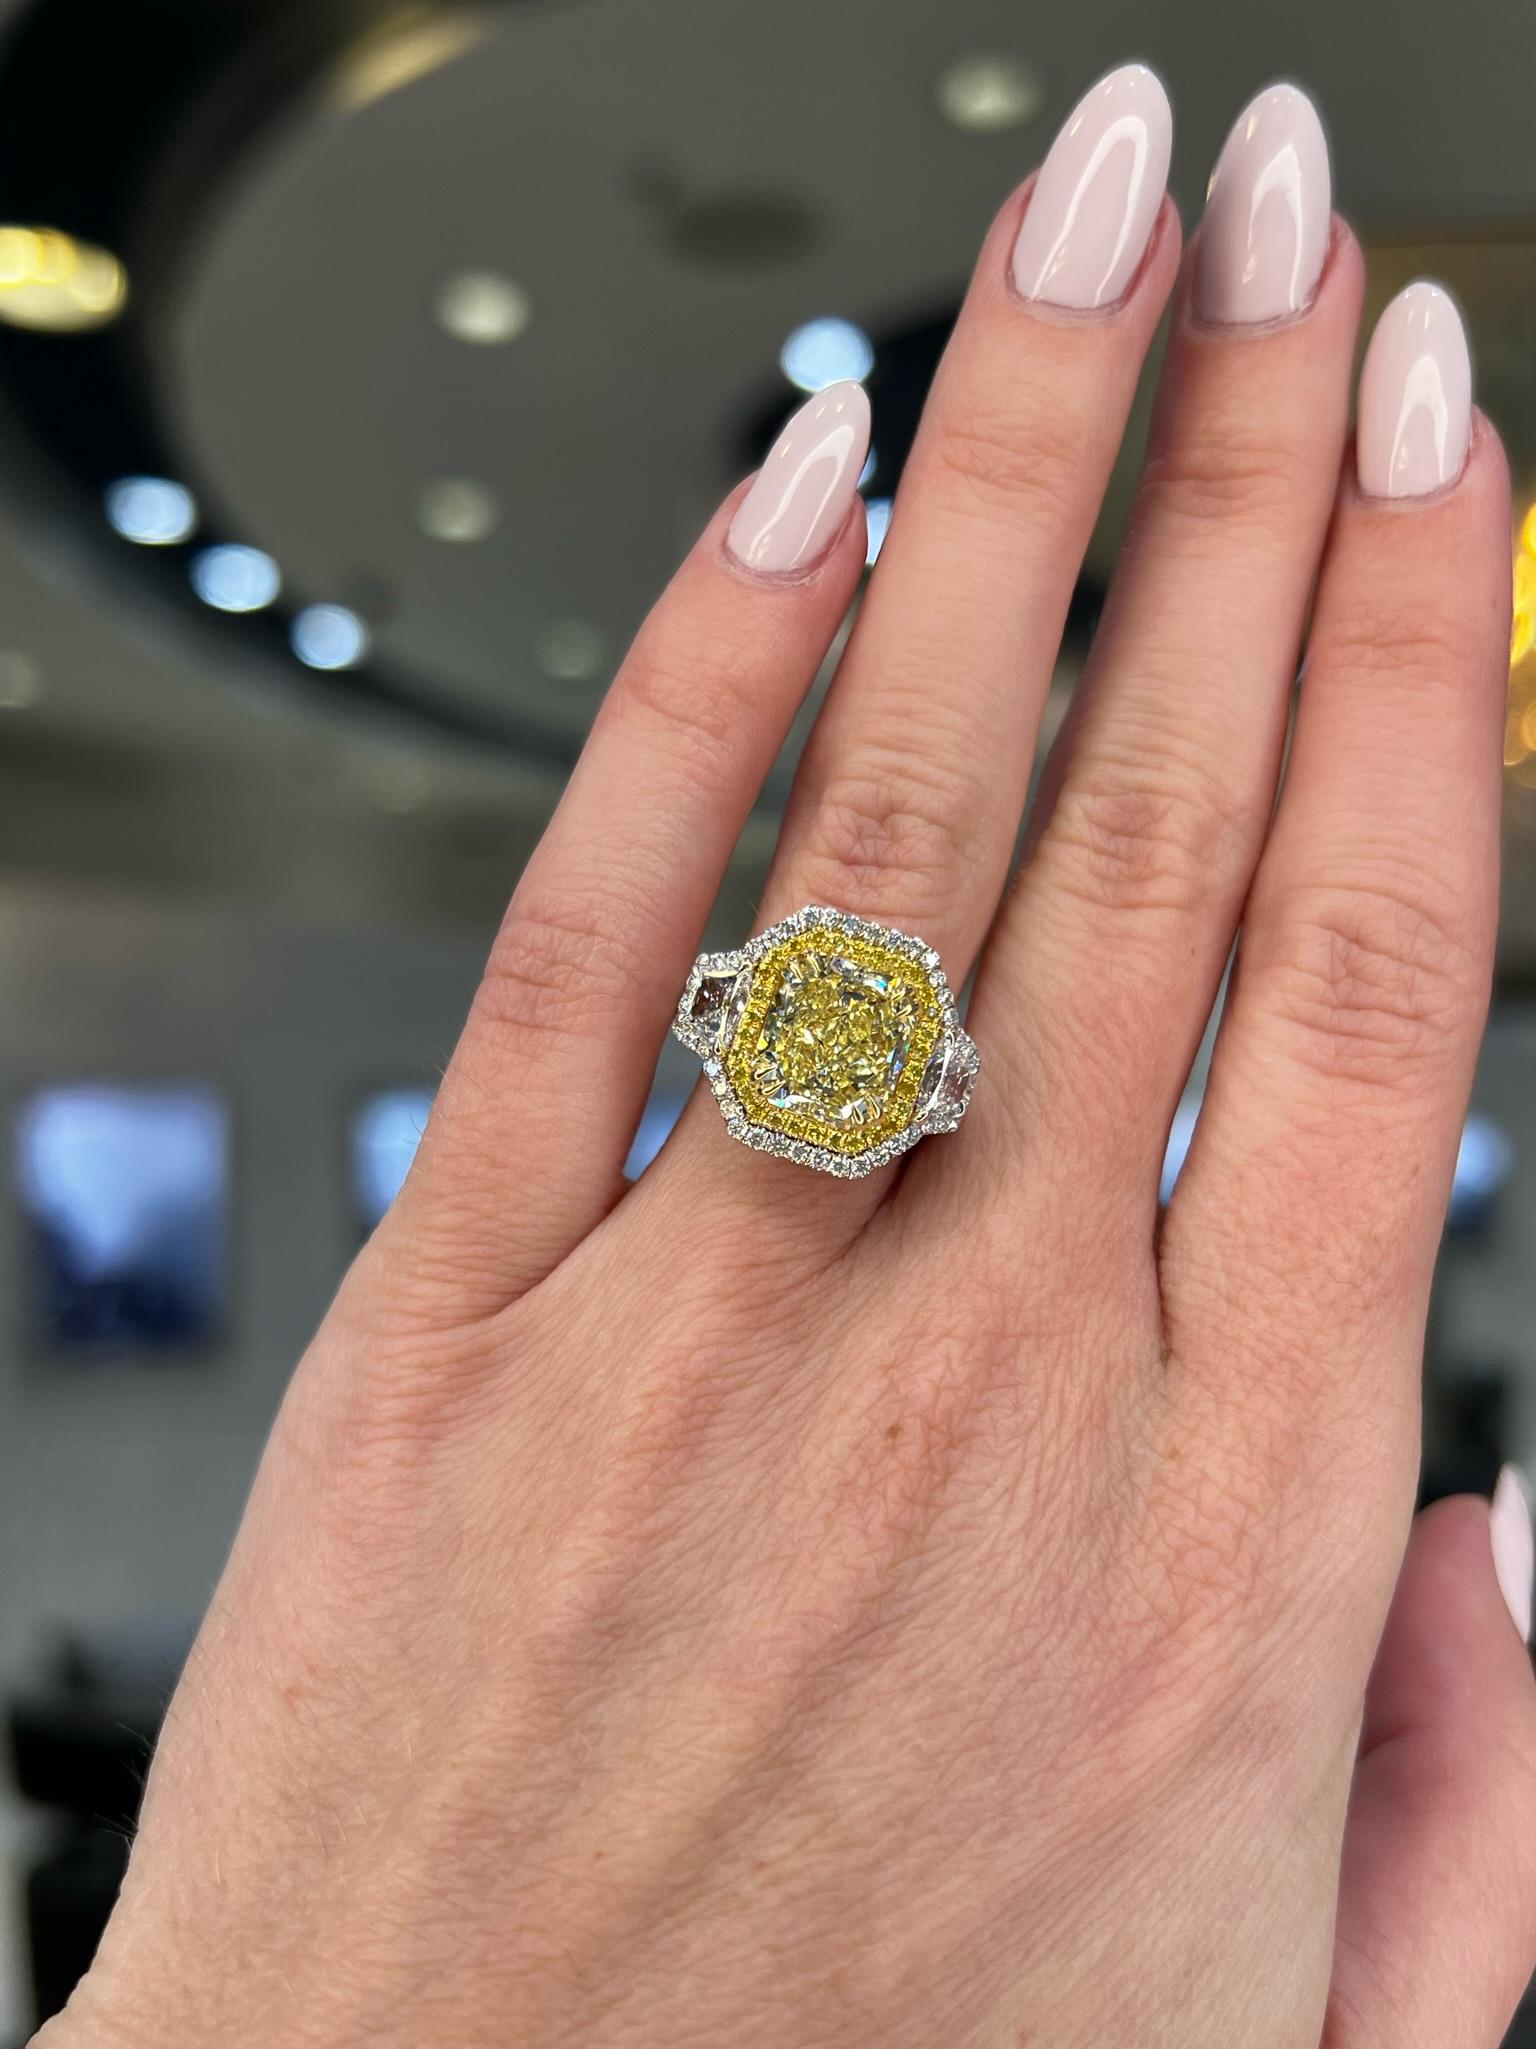 David Rosenberg 3.67 Carat Radiant Fancy Yellow VVS2 GIA Diamond Engagement Ring For Sale 3